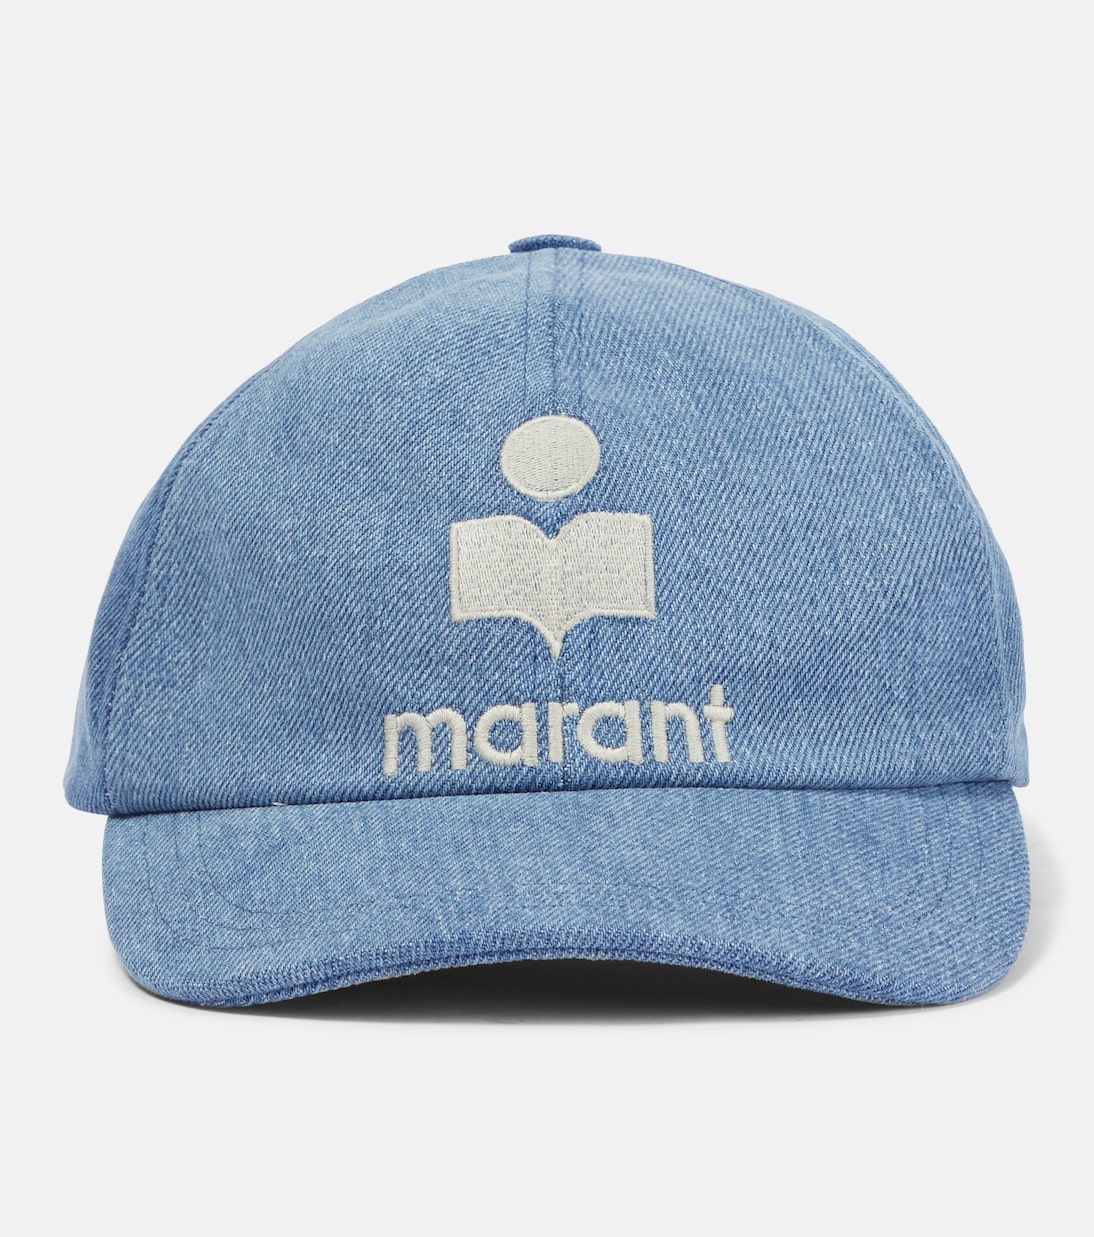 Джинсовая бейсболка tyron Isabel Marant, синий бежевая спортивная кепка tyron isabel marant